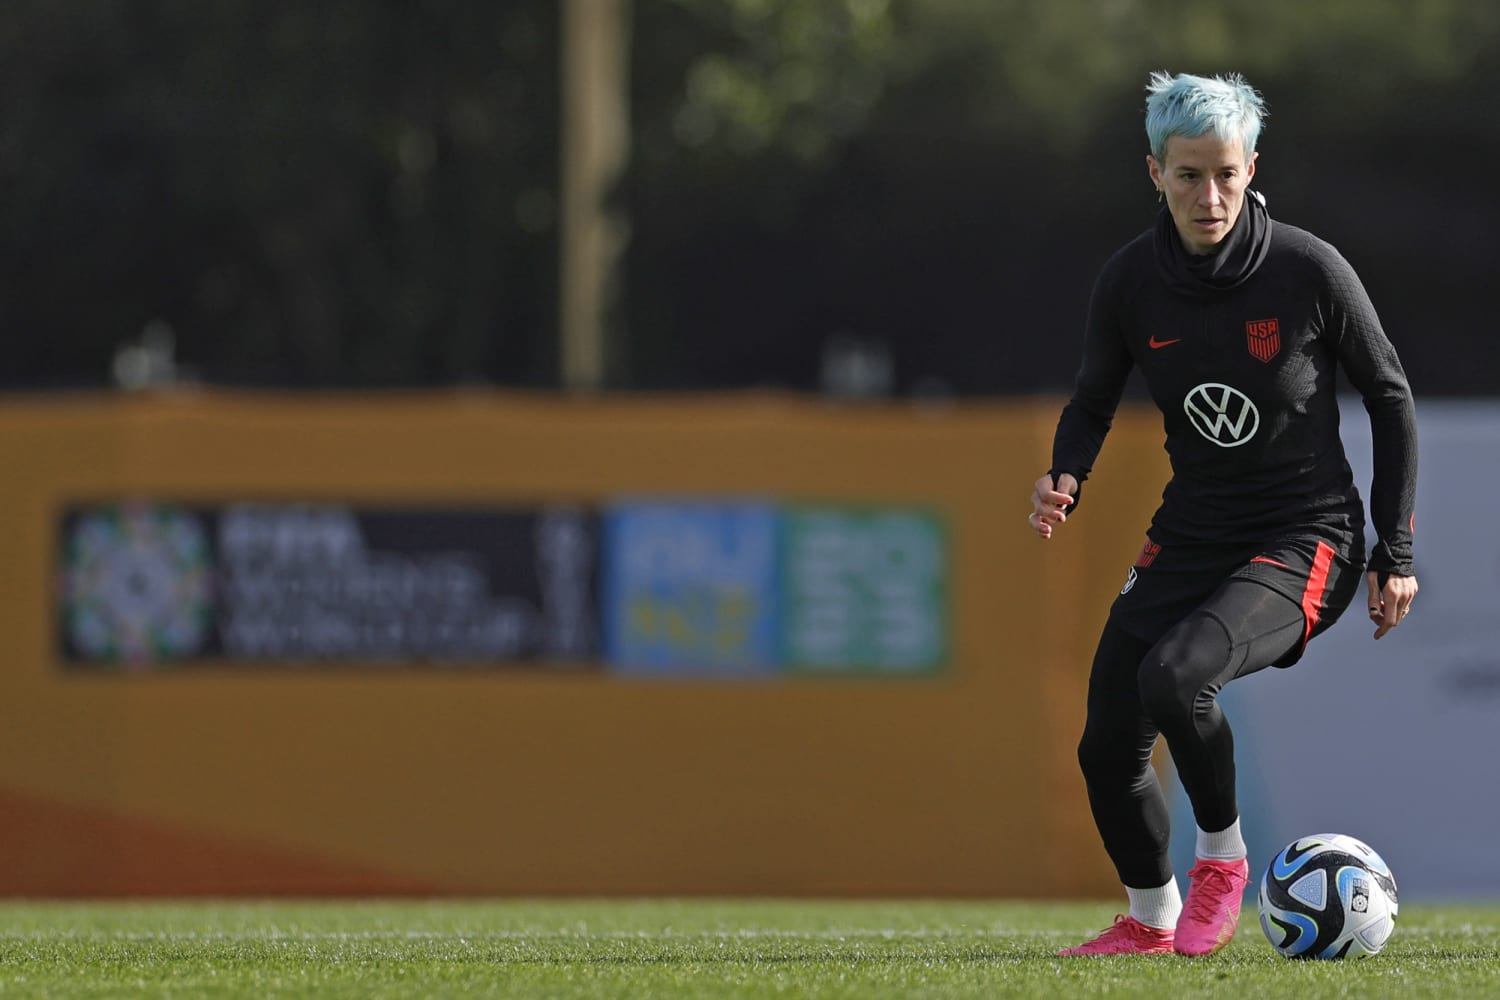 While women’s soccer boasts fierce LGBTQ advocates, FIFA reviews transgender rules